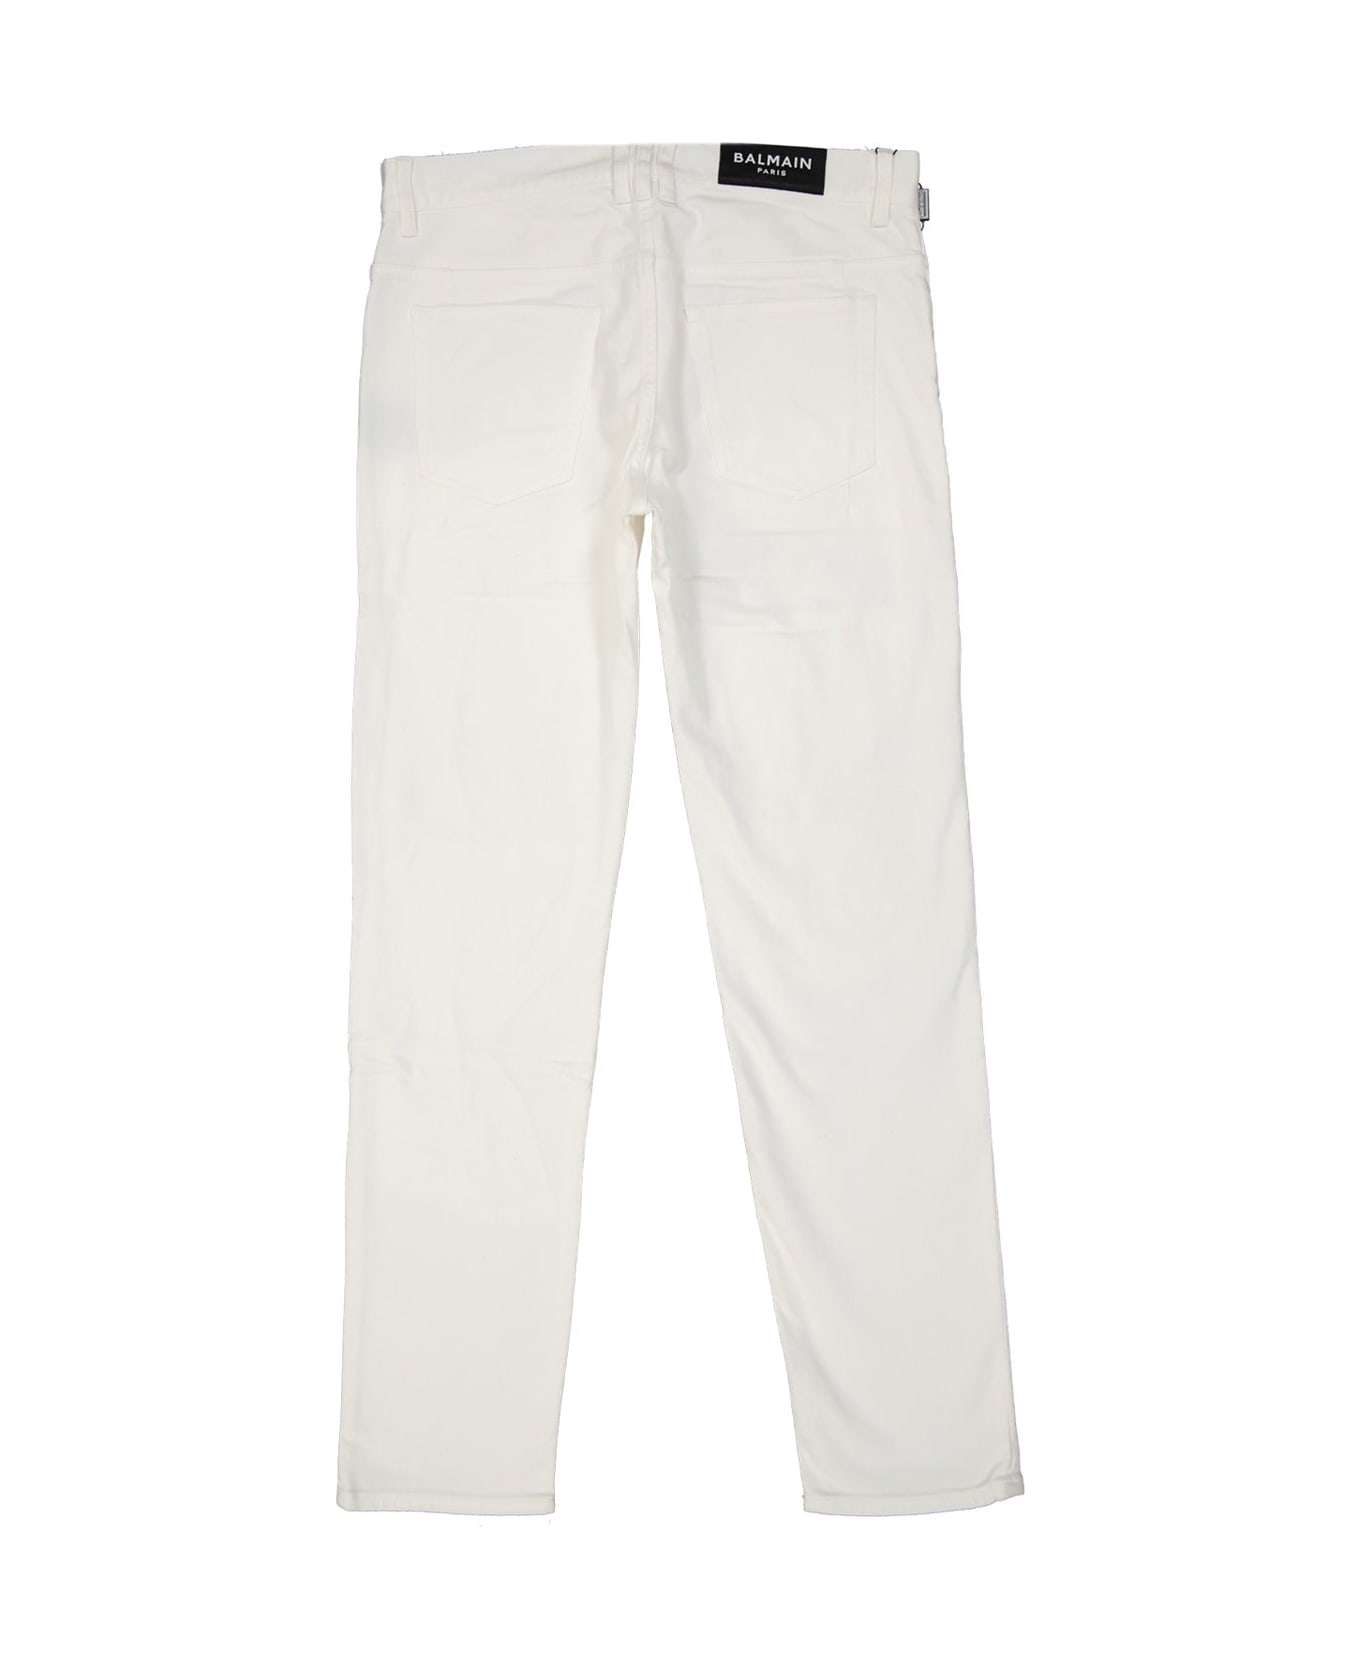 Balmain Cotton Denim Jeans - White